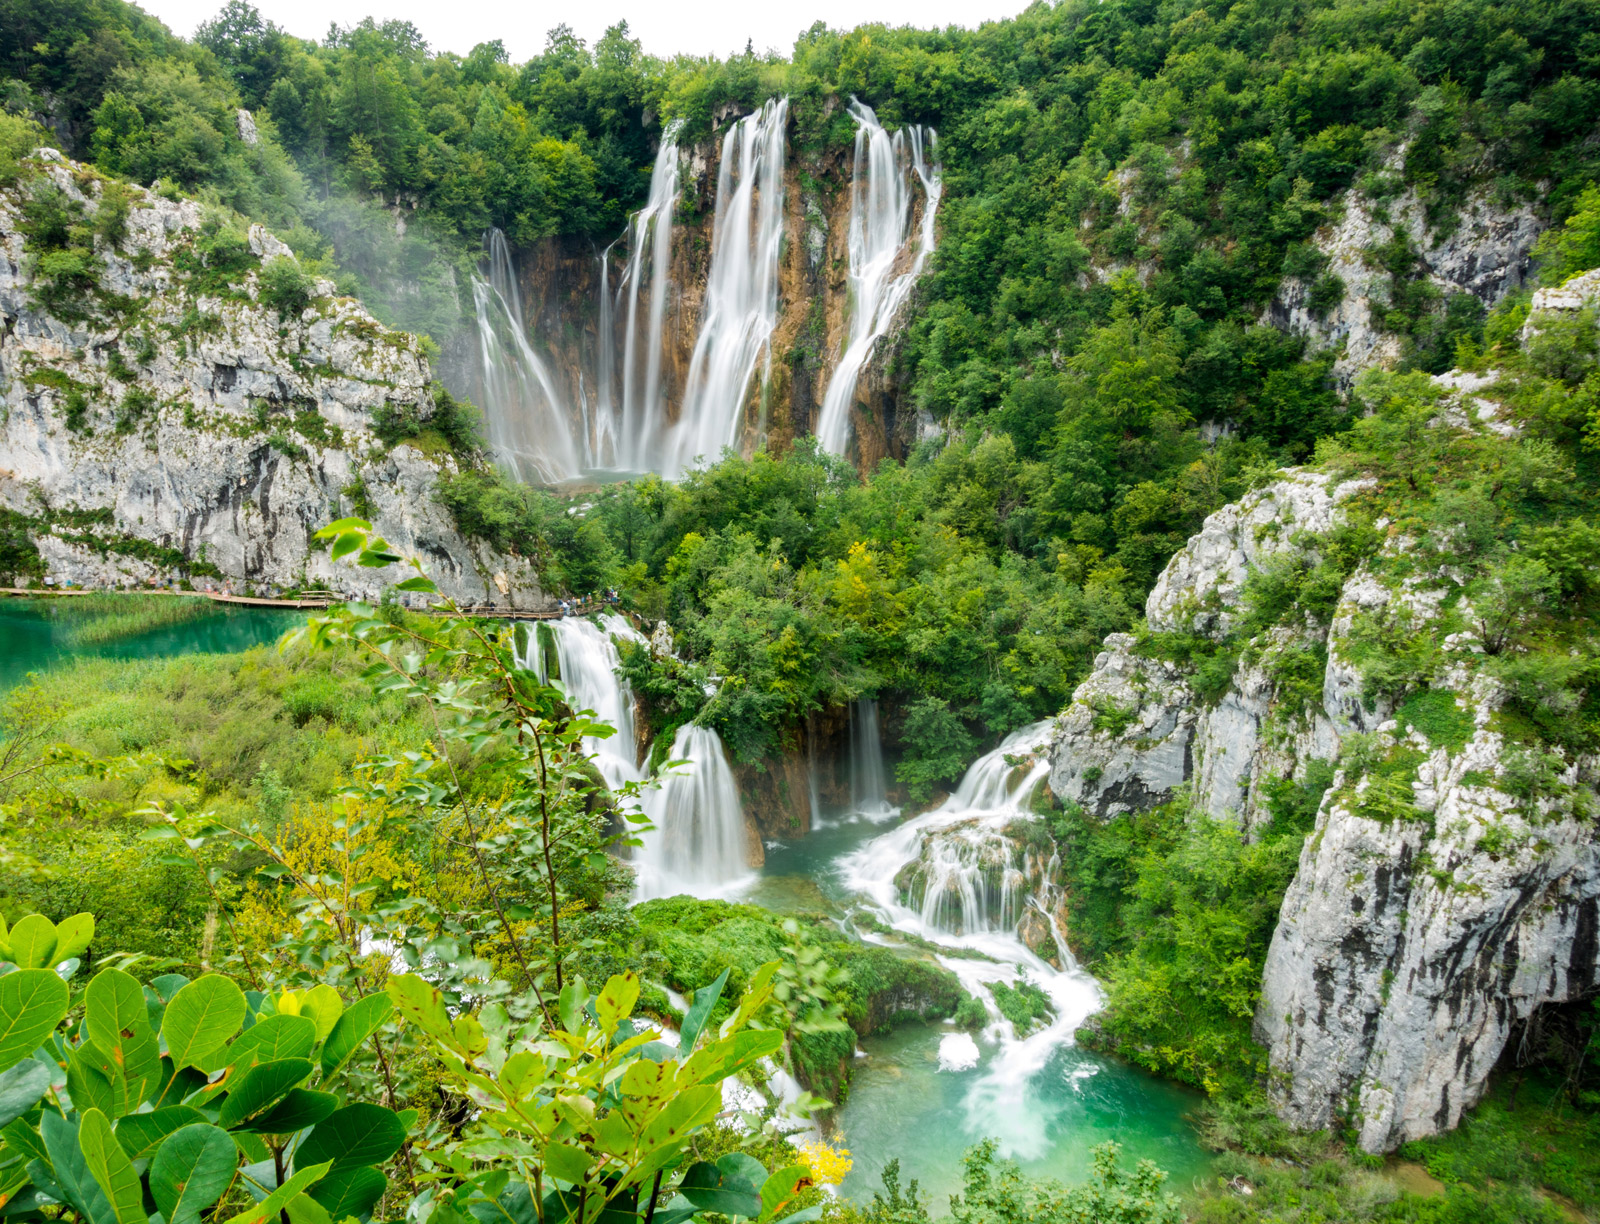 Wundervolles Foto von den Wasserfällen in Plitvice Lakes National Park